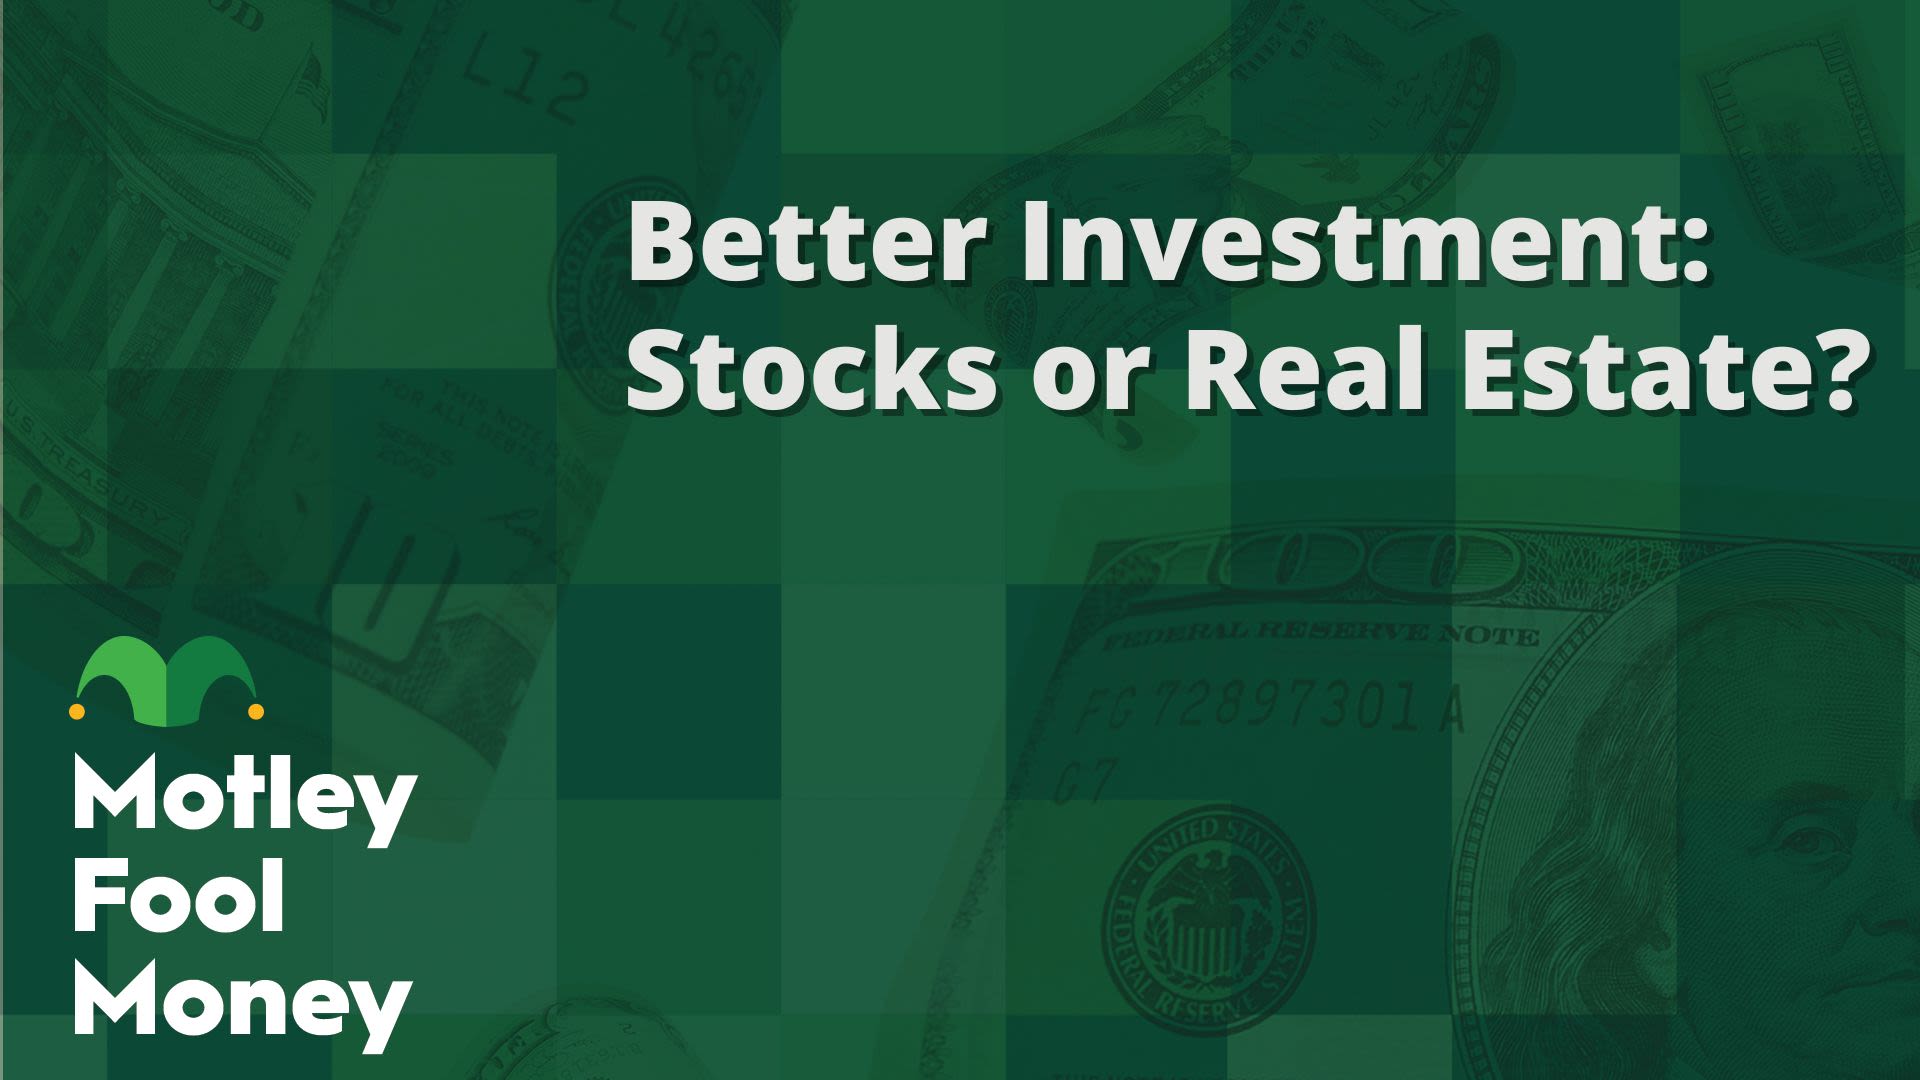 Better Investment: Stocks or Real Estate?